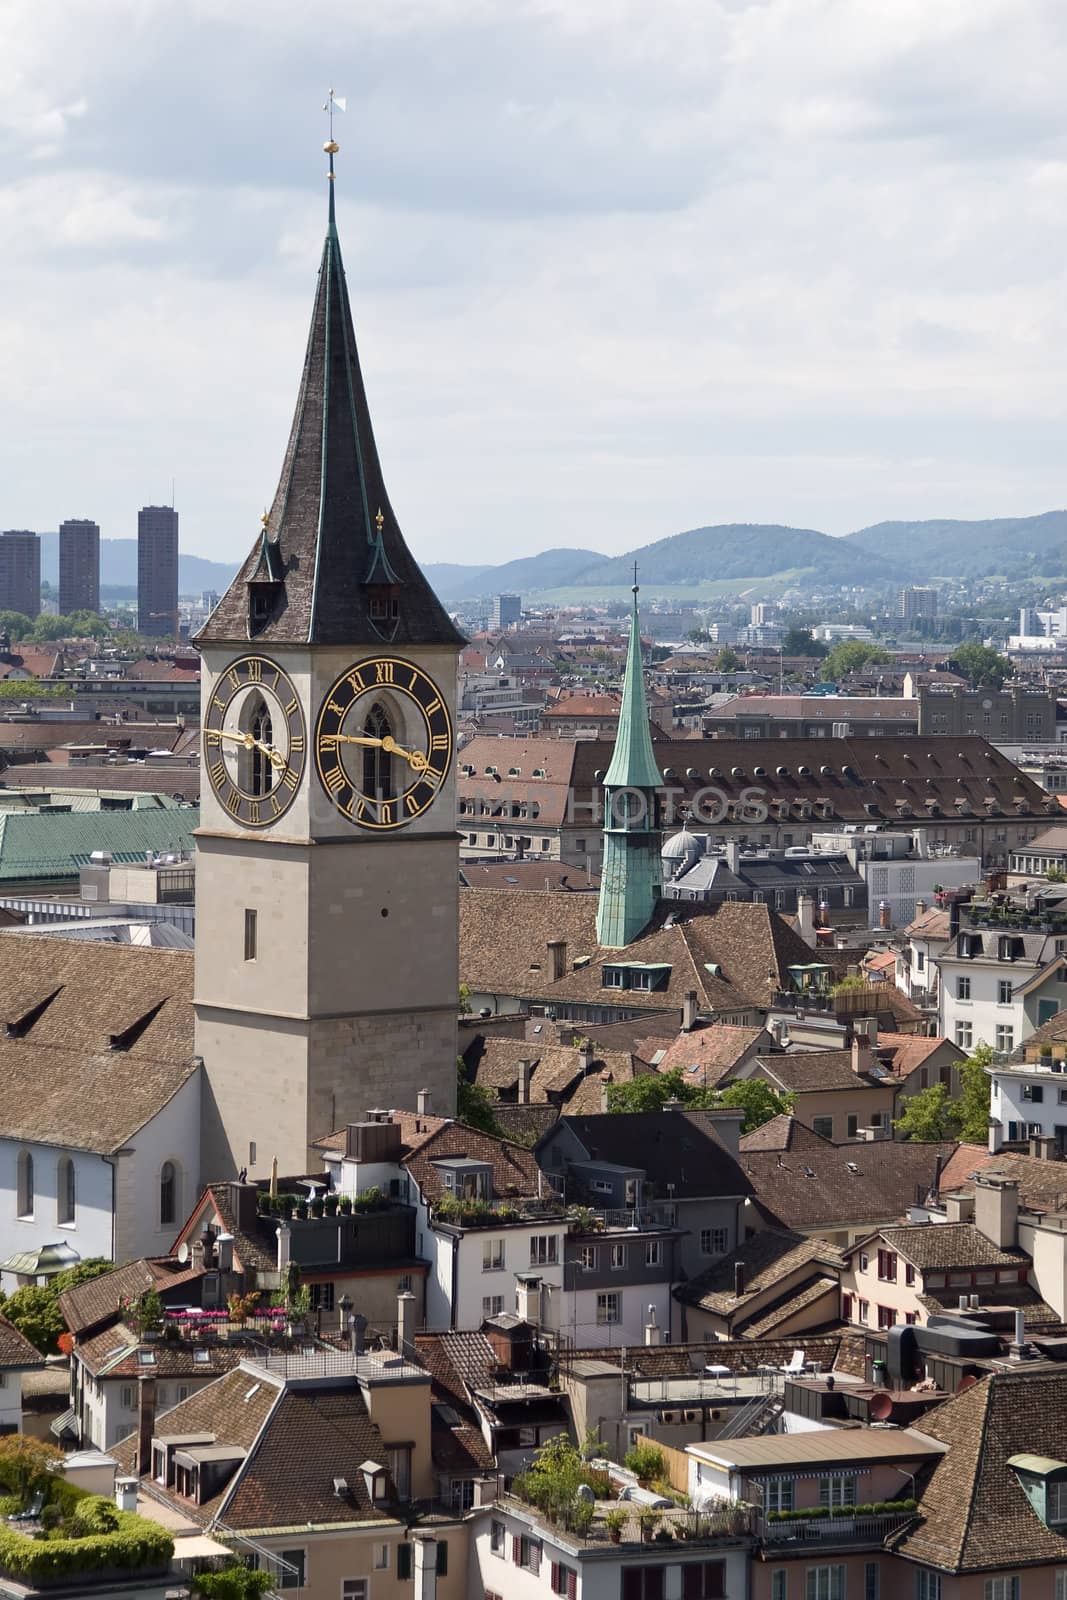 St. Peter's church in Zurich by swisshippo